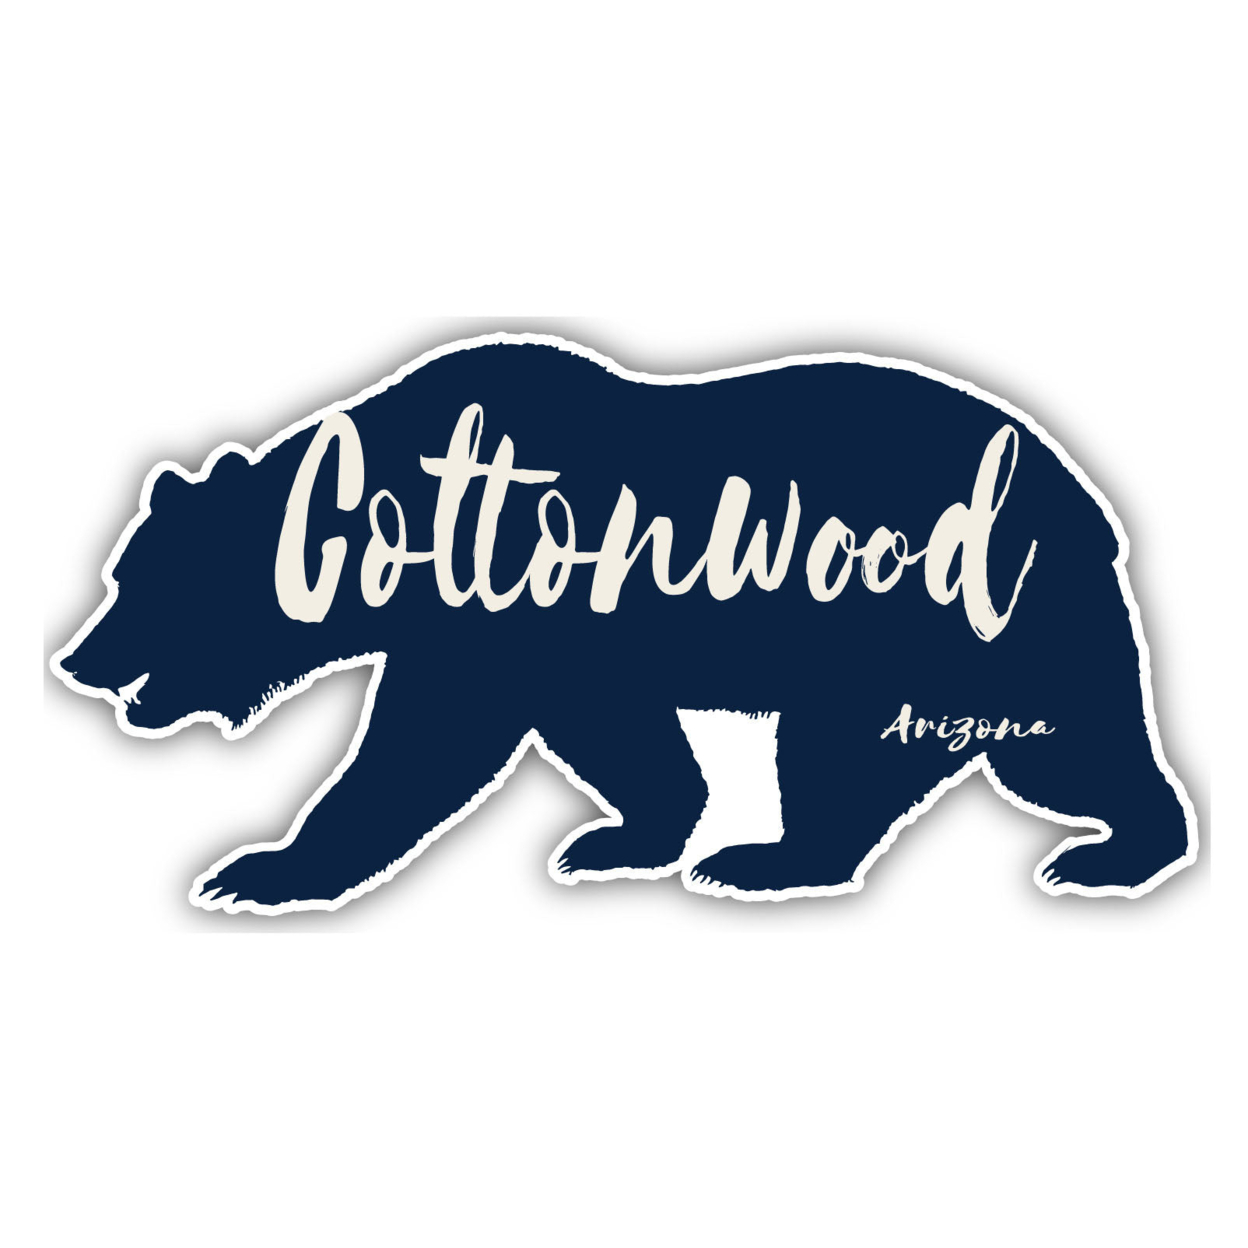 Cottonwood Arizona Souvenir Decorative Stickers (Choose Theme And Size) - 4-Pack, 4-Inch, Bear